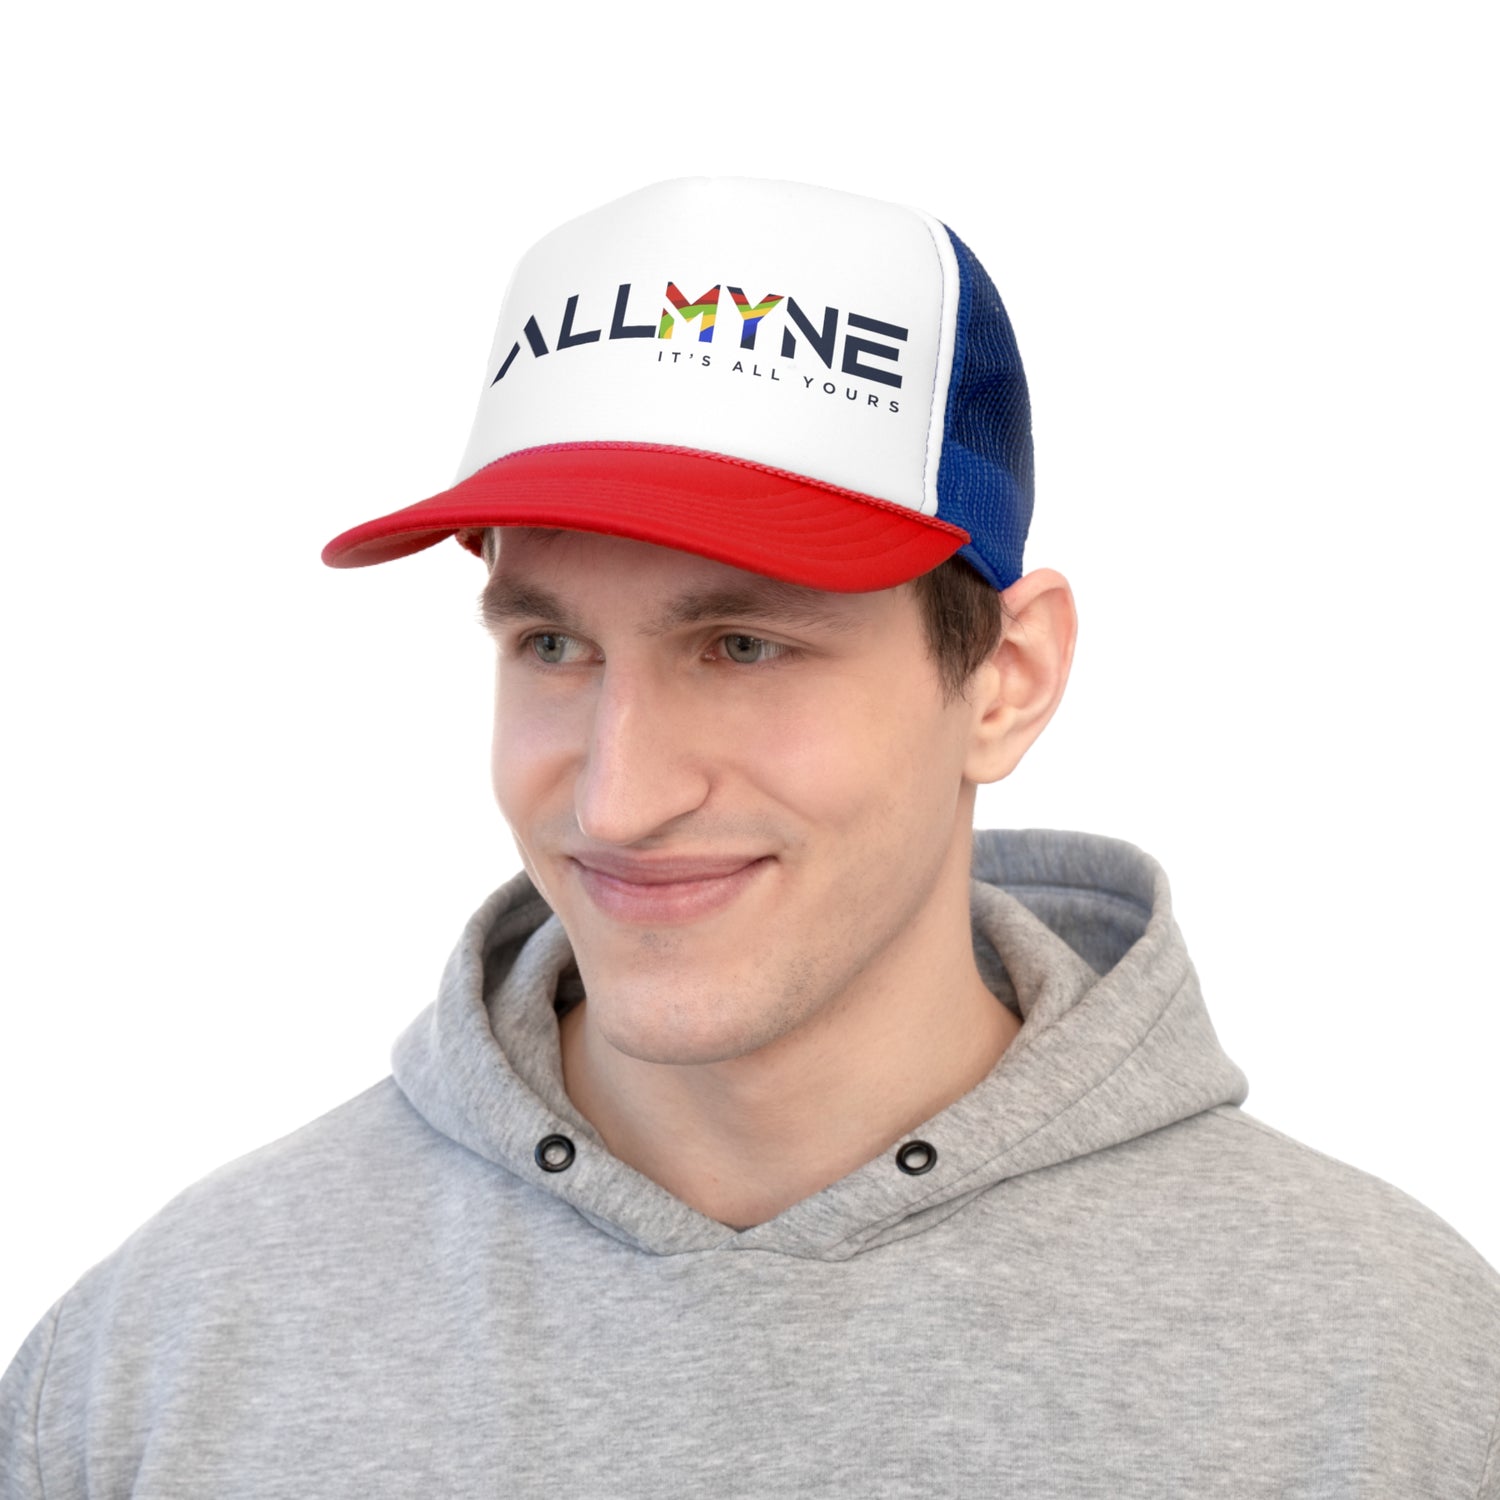 ALLMYNE Trucker Caps